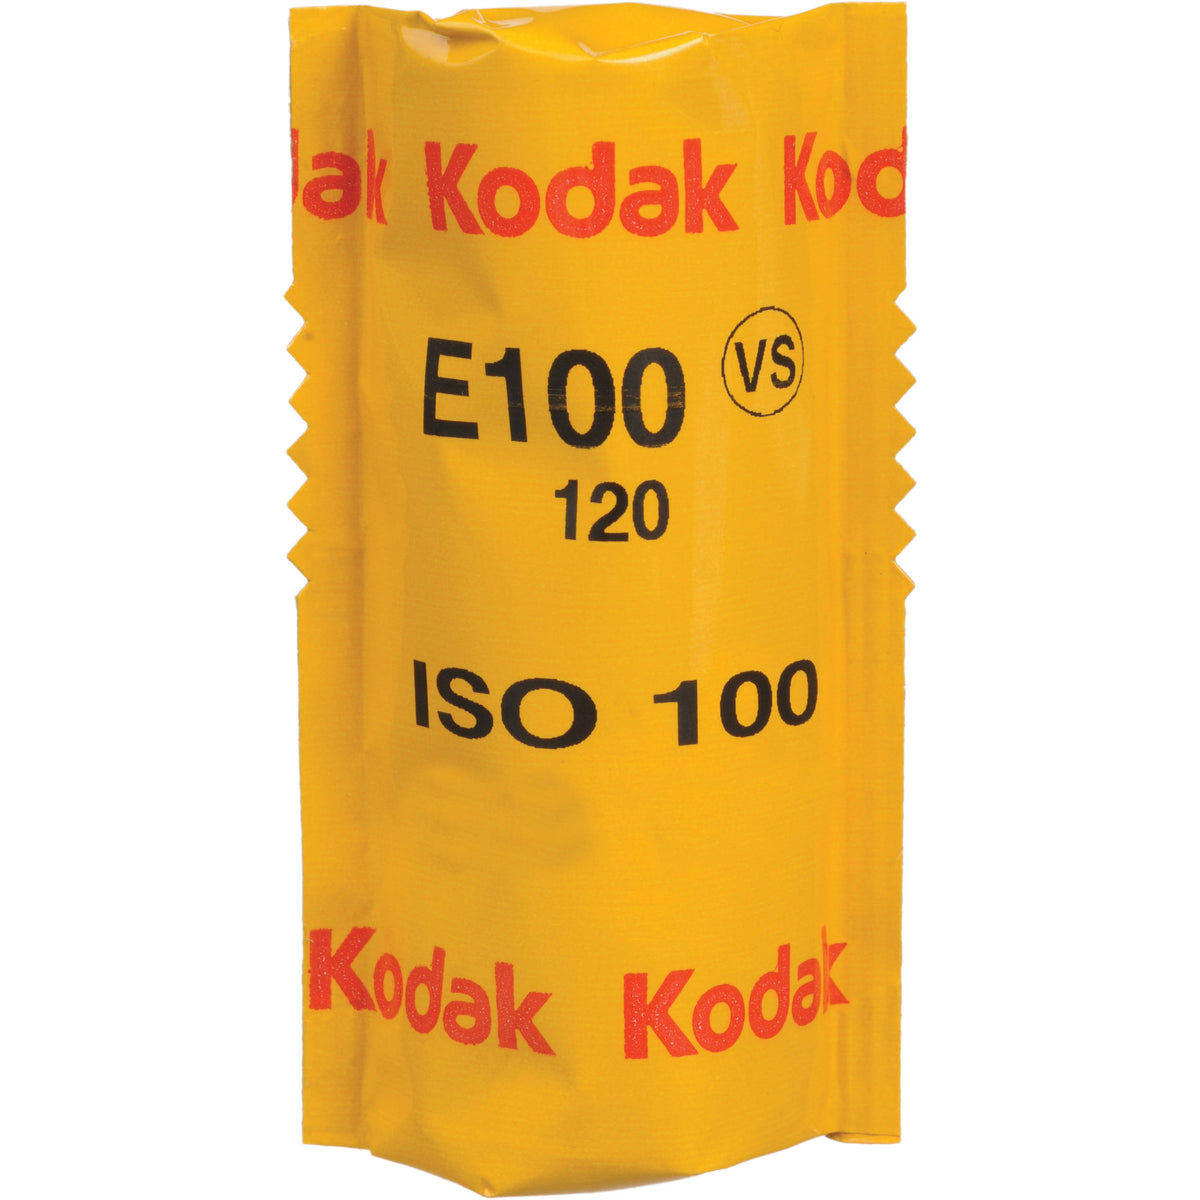 KODAK Ektachrome E100 120 — Legacy Photo Lab